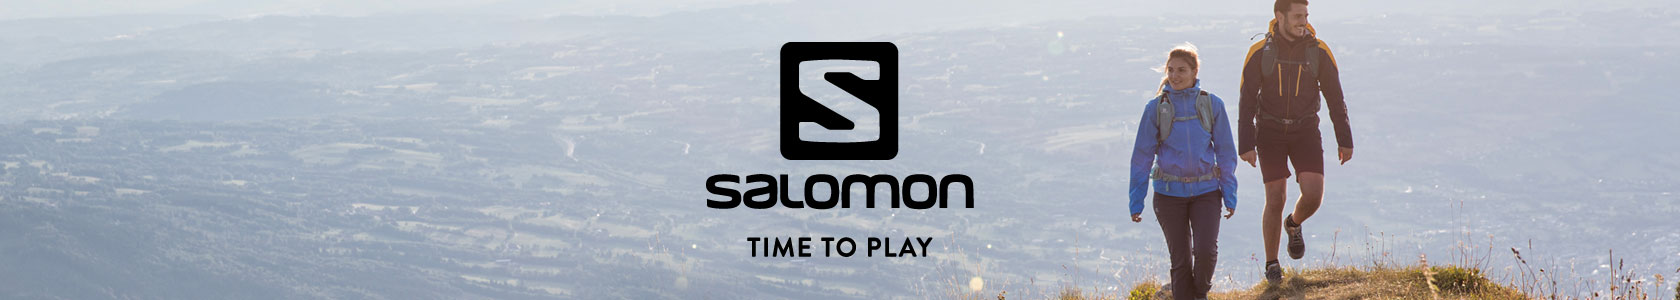 Salomon image